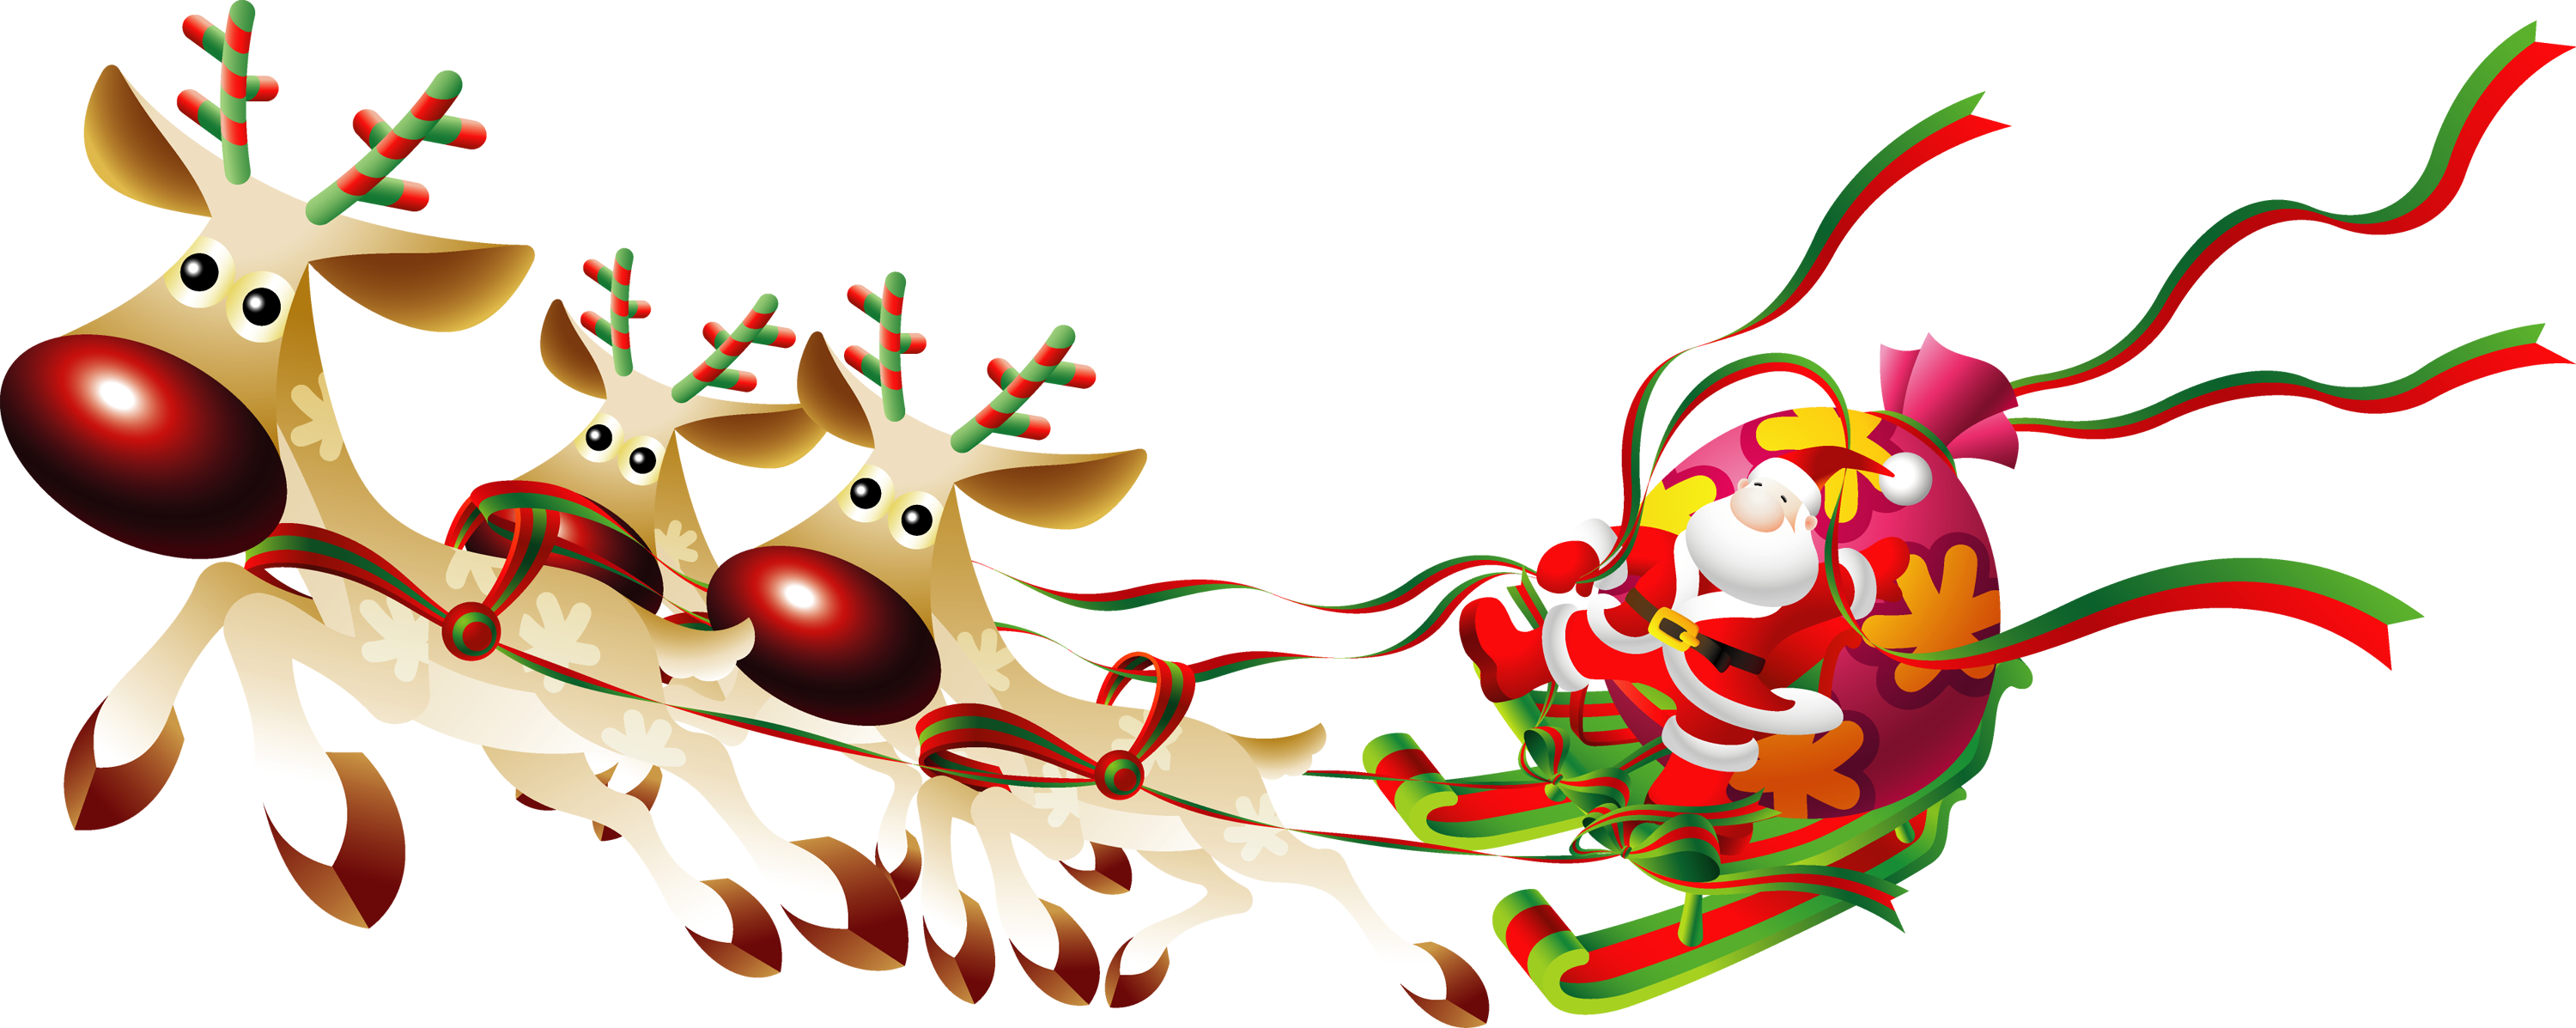 Santa sleigh PNG image free Download 